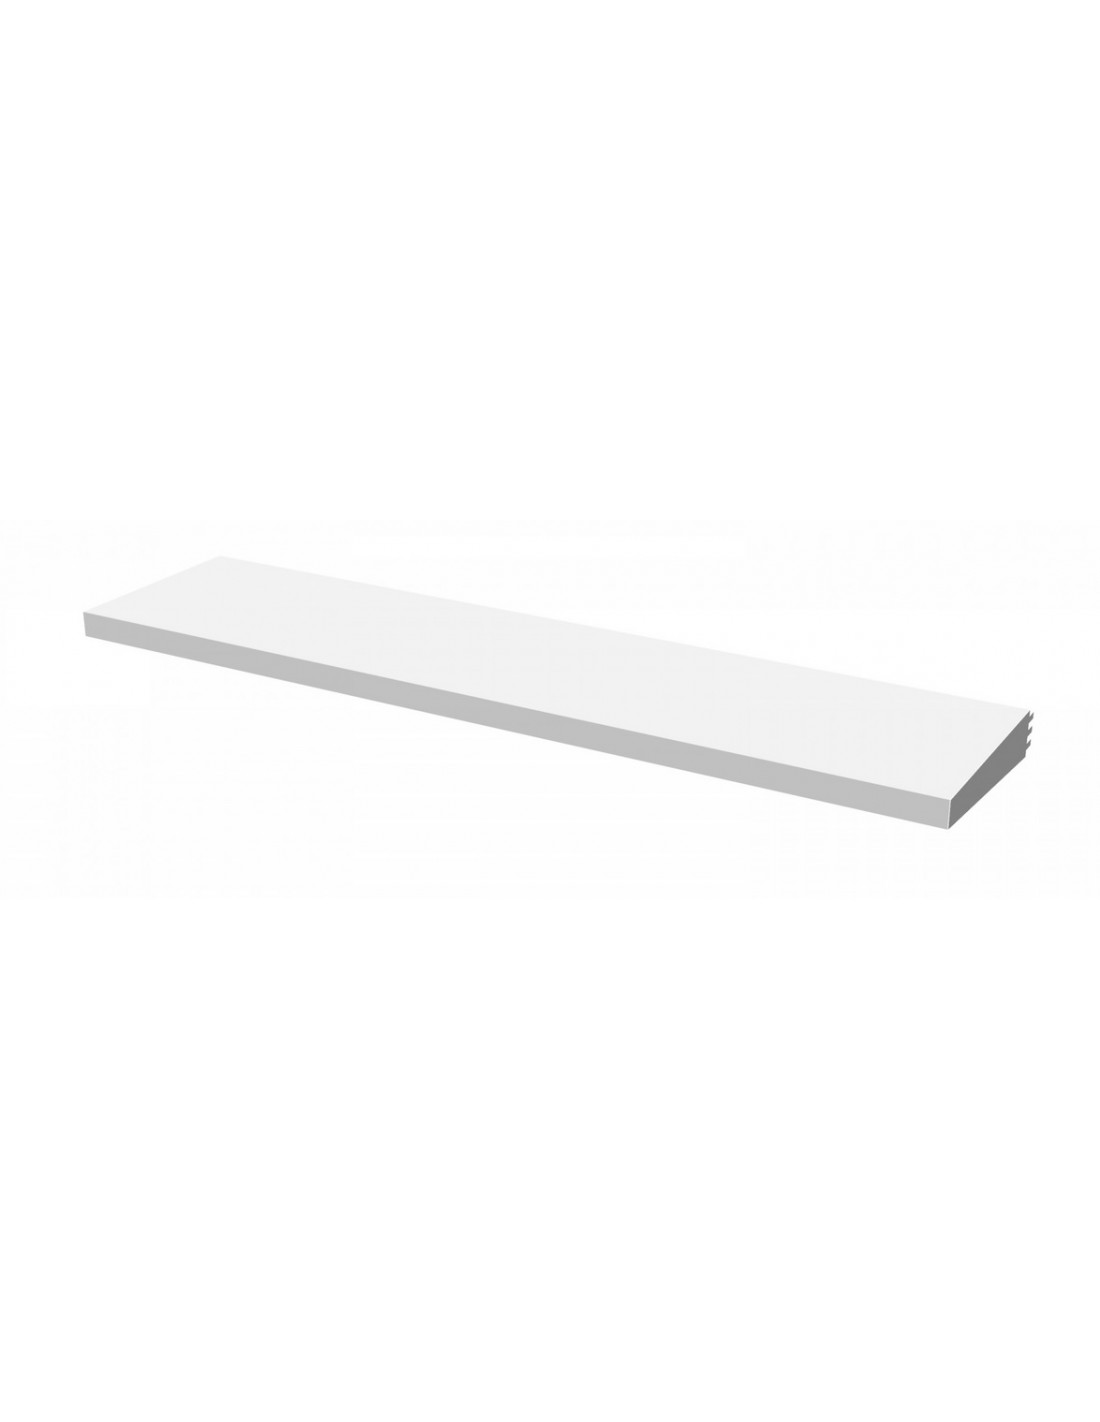 Additional shelf in white painted sheet cm 150 - For mod. VULCANO 60 (n.2 for VULCANO60 300)